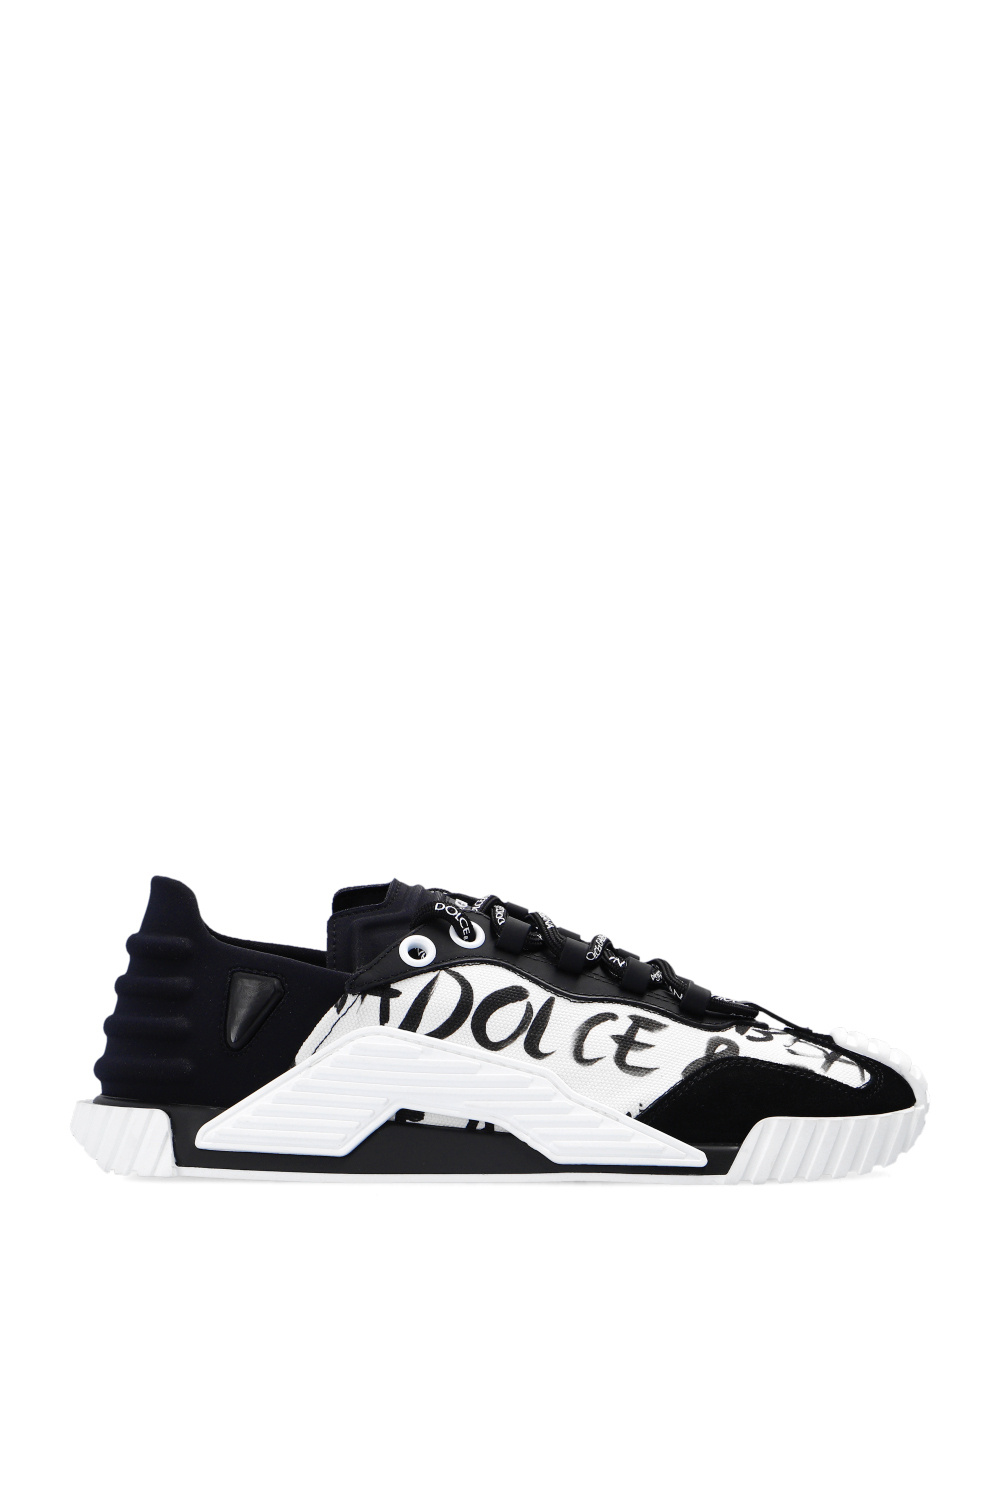 Dolce & Gabbana 'NS1' sneakers | Women's Shoes | Vitkac